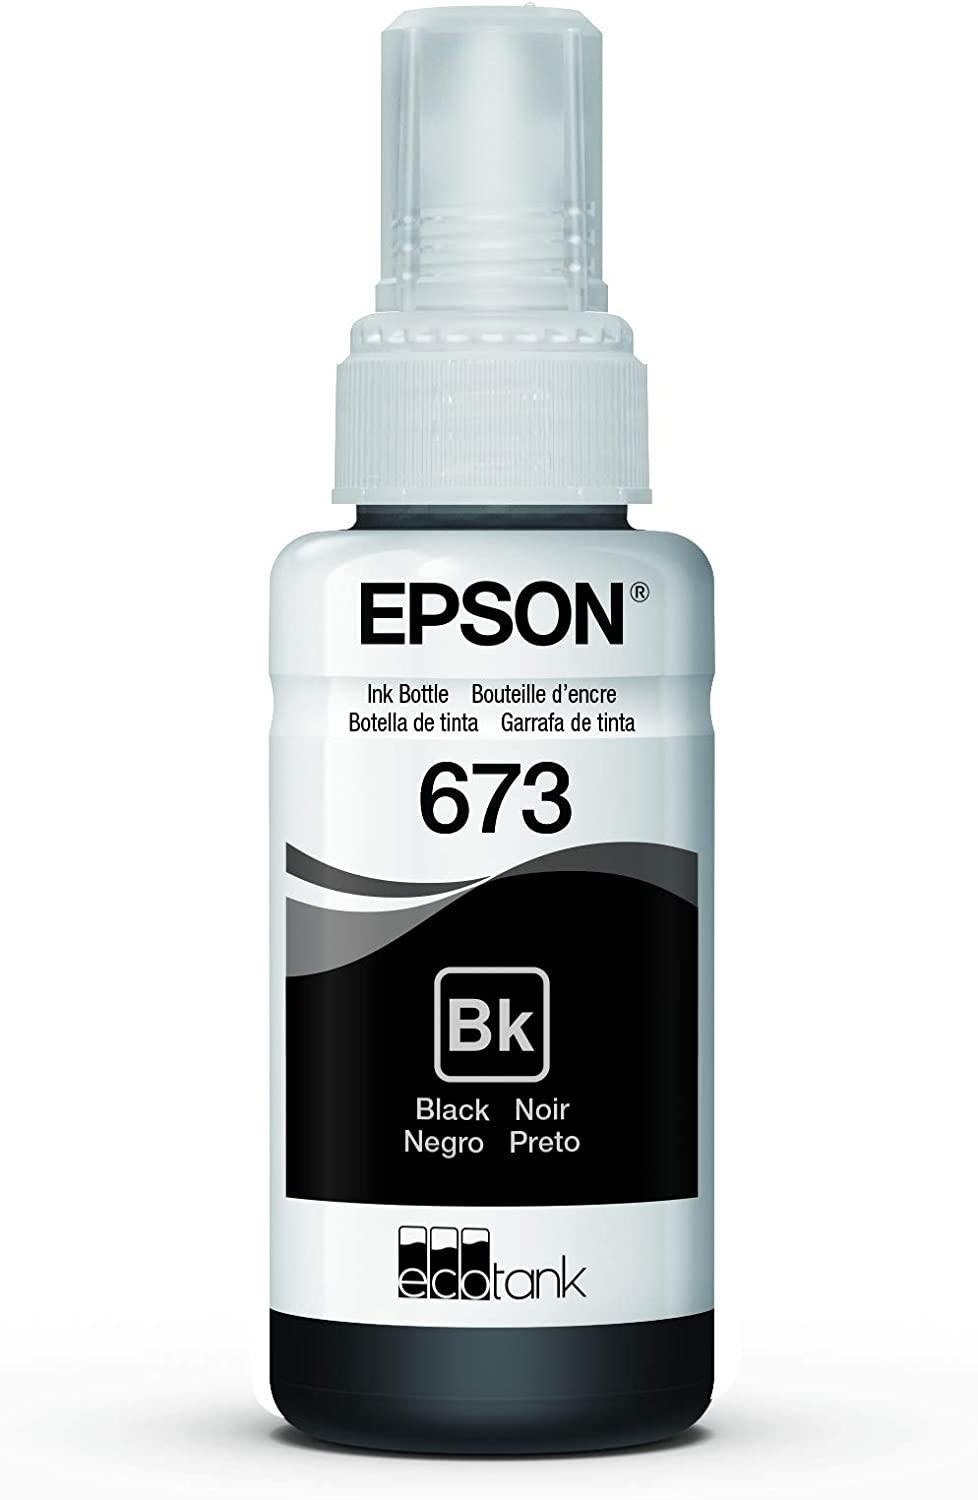 Botella De Tinta Original Epson Negra para L800, T673120-AL